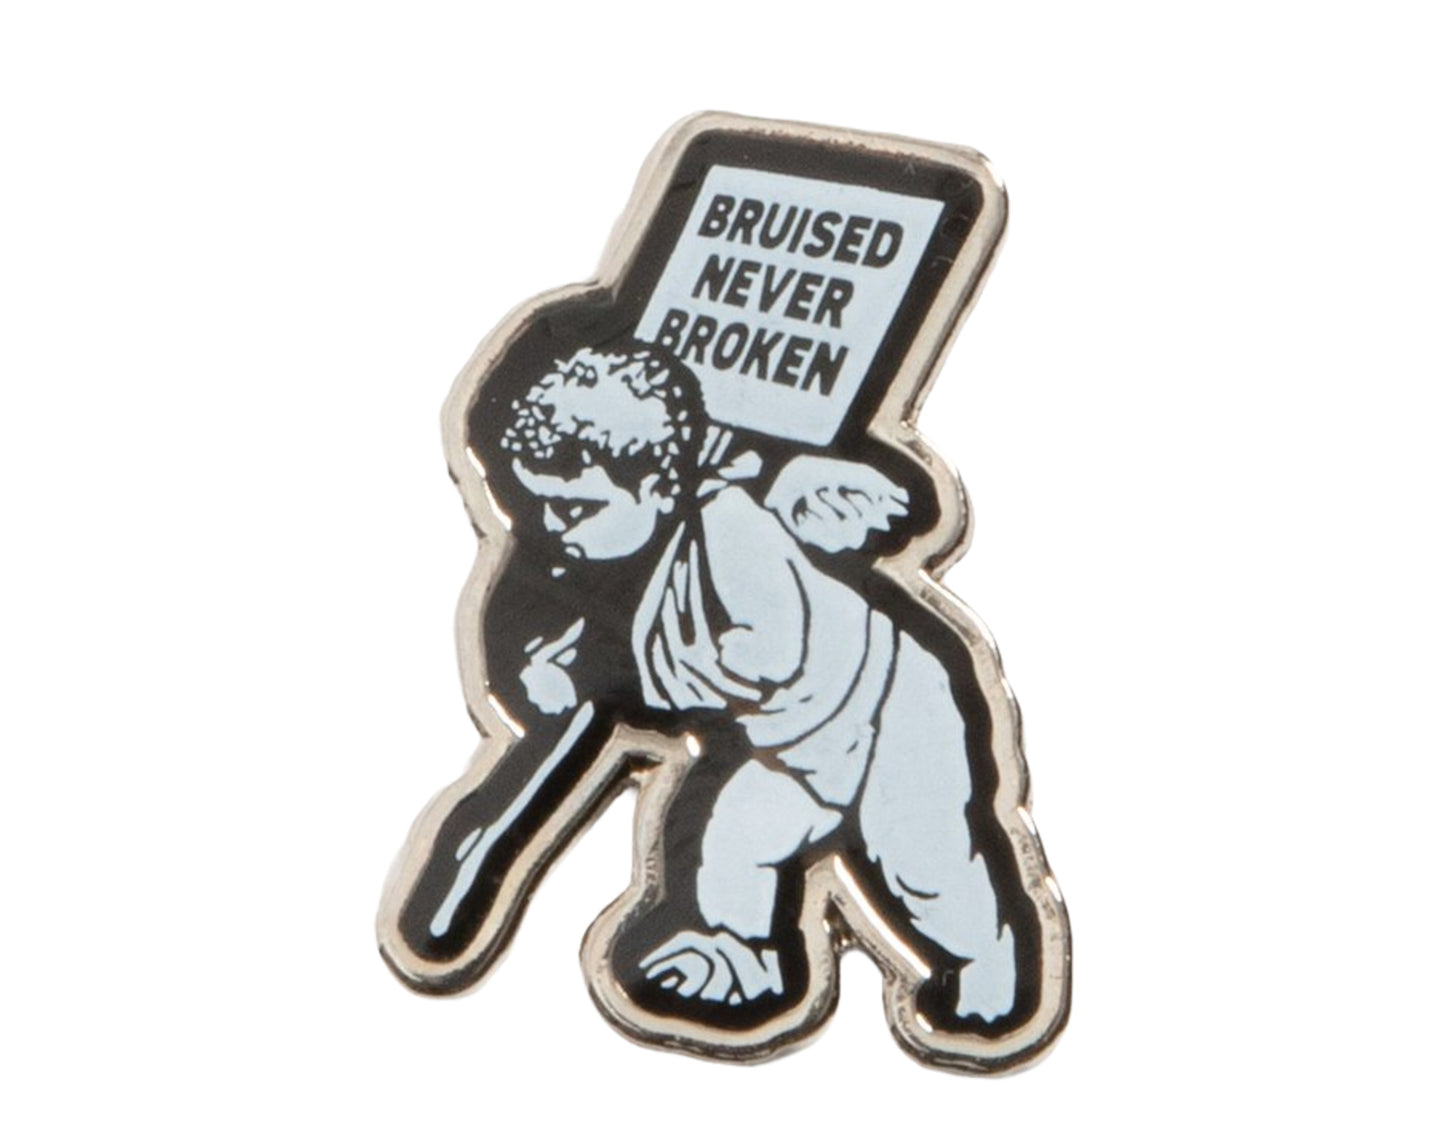 Prps Bruised, Never Broken Pin